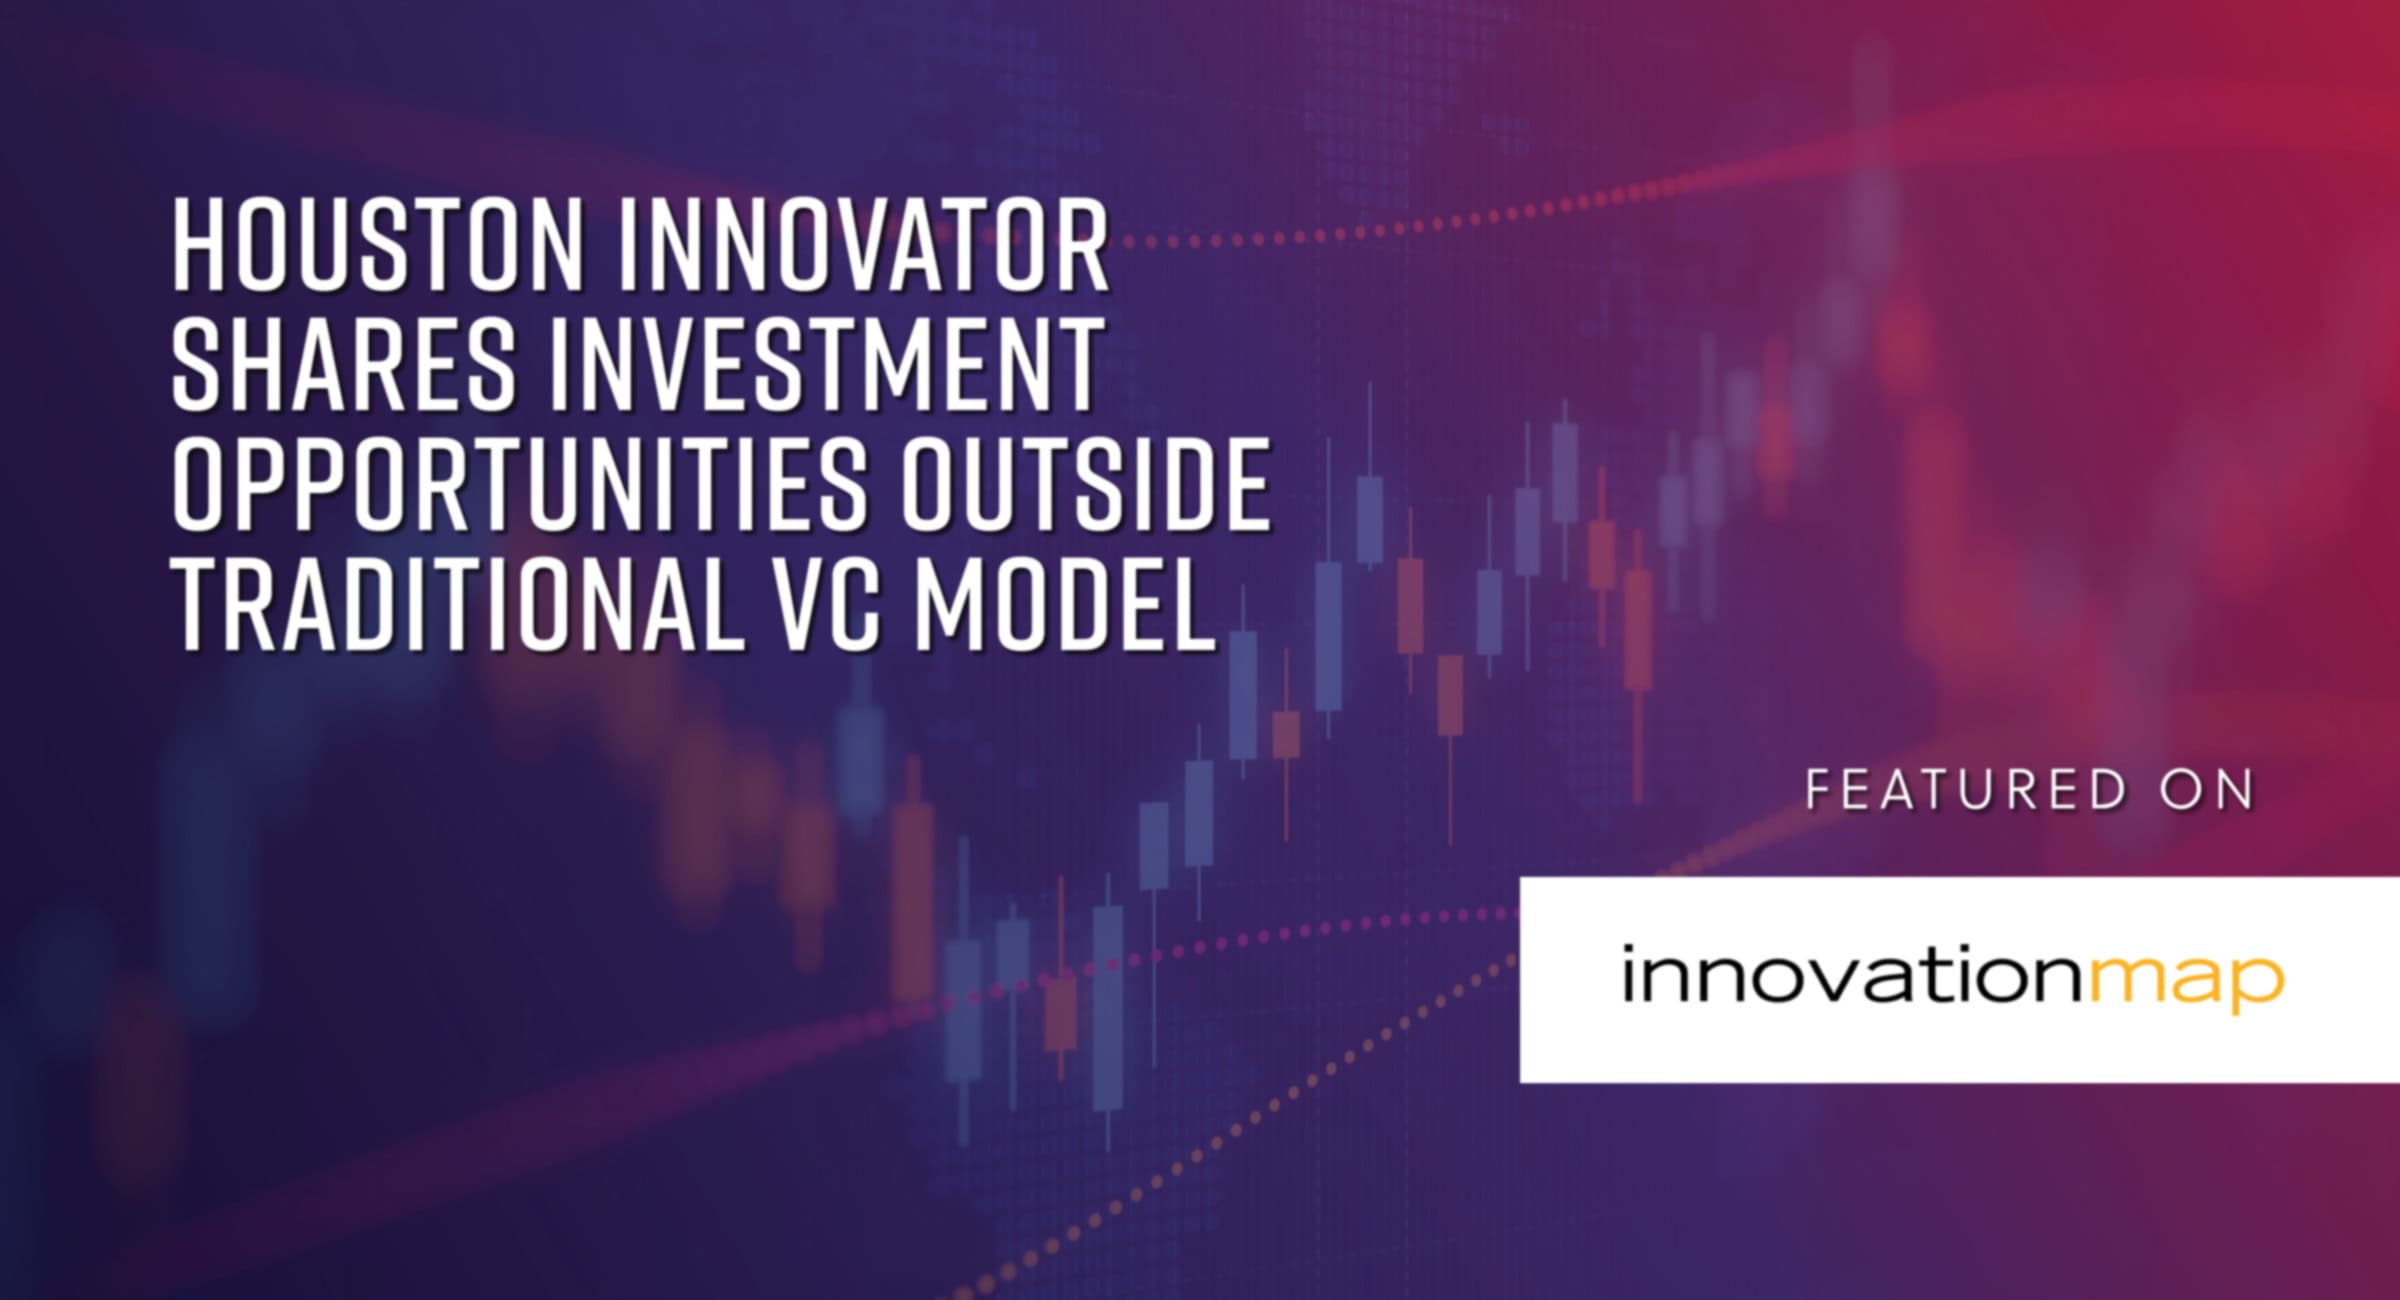 Houston innovator shares investment opportunities outside traditional VC model